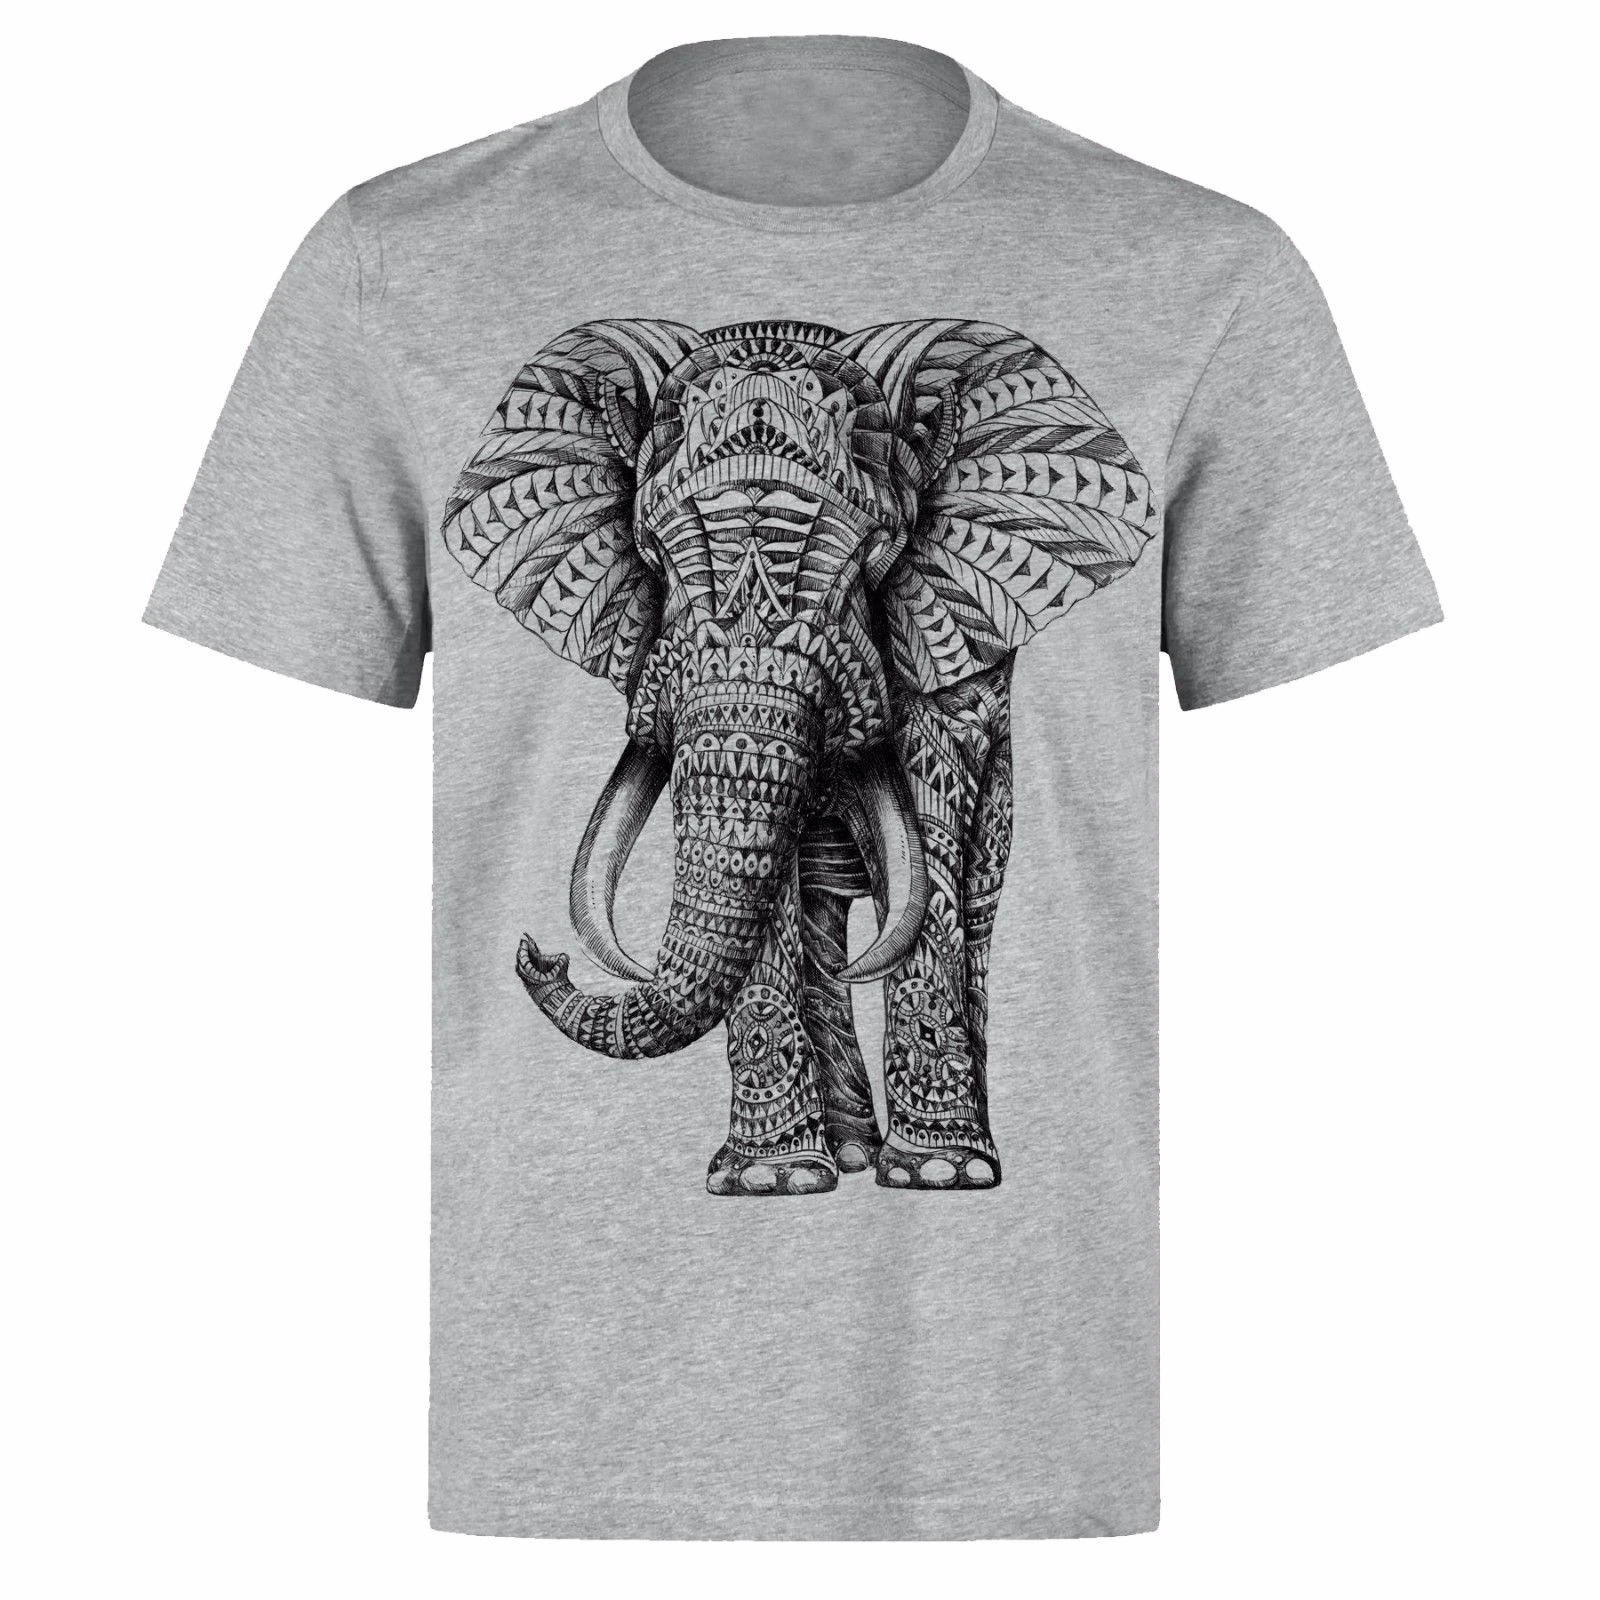 KARMA ELEPHANT GANESH tatuaje de alta calidad UNISEX PH64 camiseta gris  camiseta hombres camisetas marca ropa divertida camiseta Homme|Camisetas| -  AliExpress